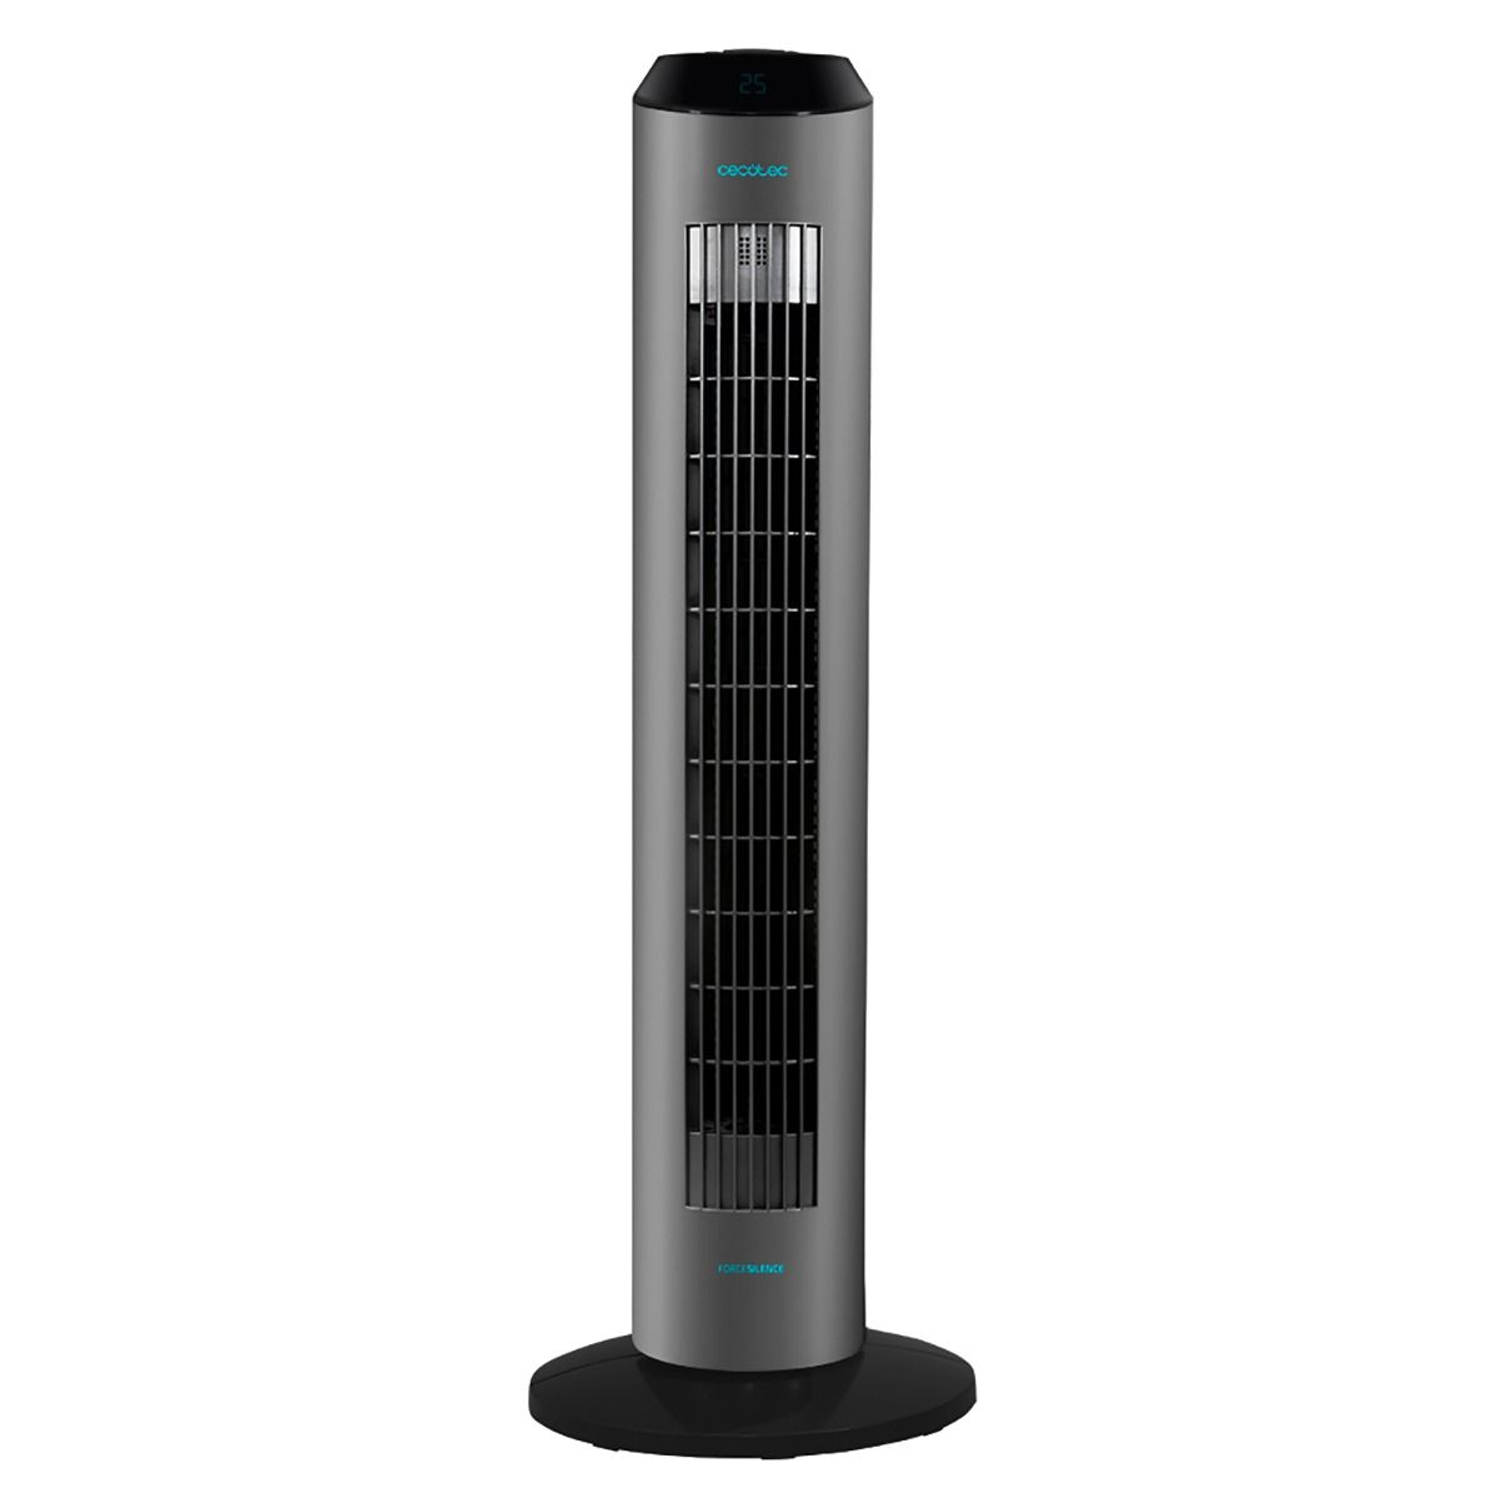 Cecotec Stille Torenventilator - Ionisator luchtverfrisser - Afstandsbediening en timer - Oscillerende kolomventilator - Ventilator staand